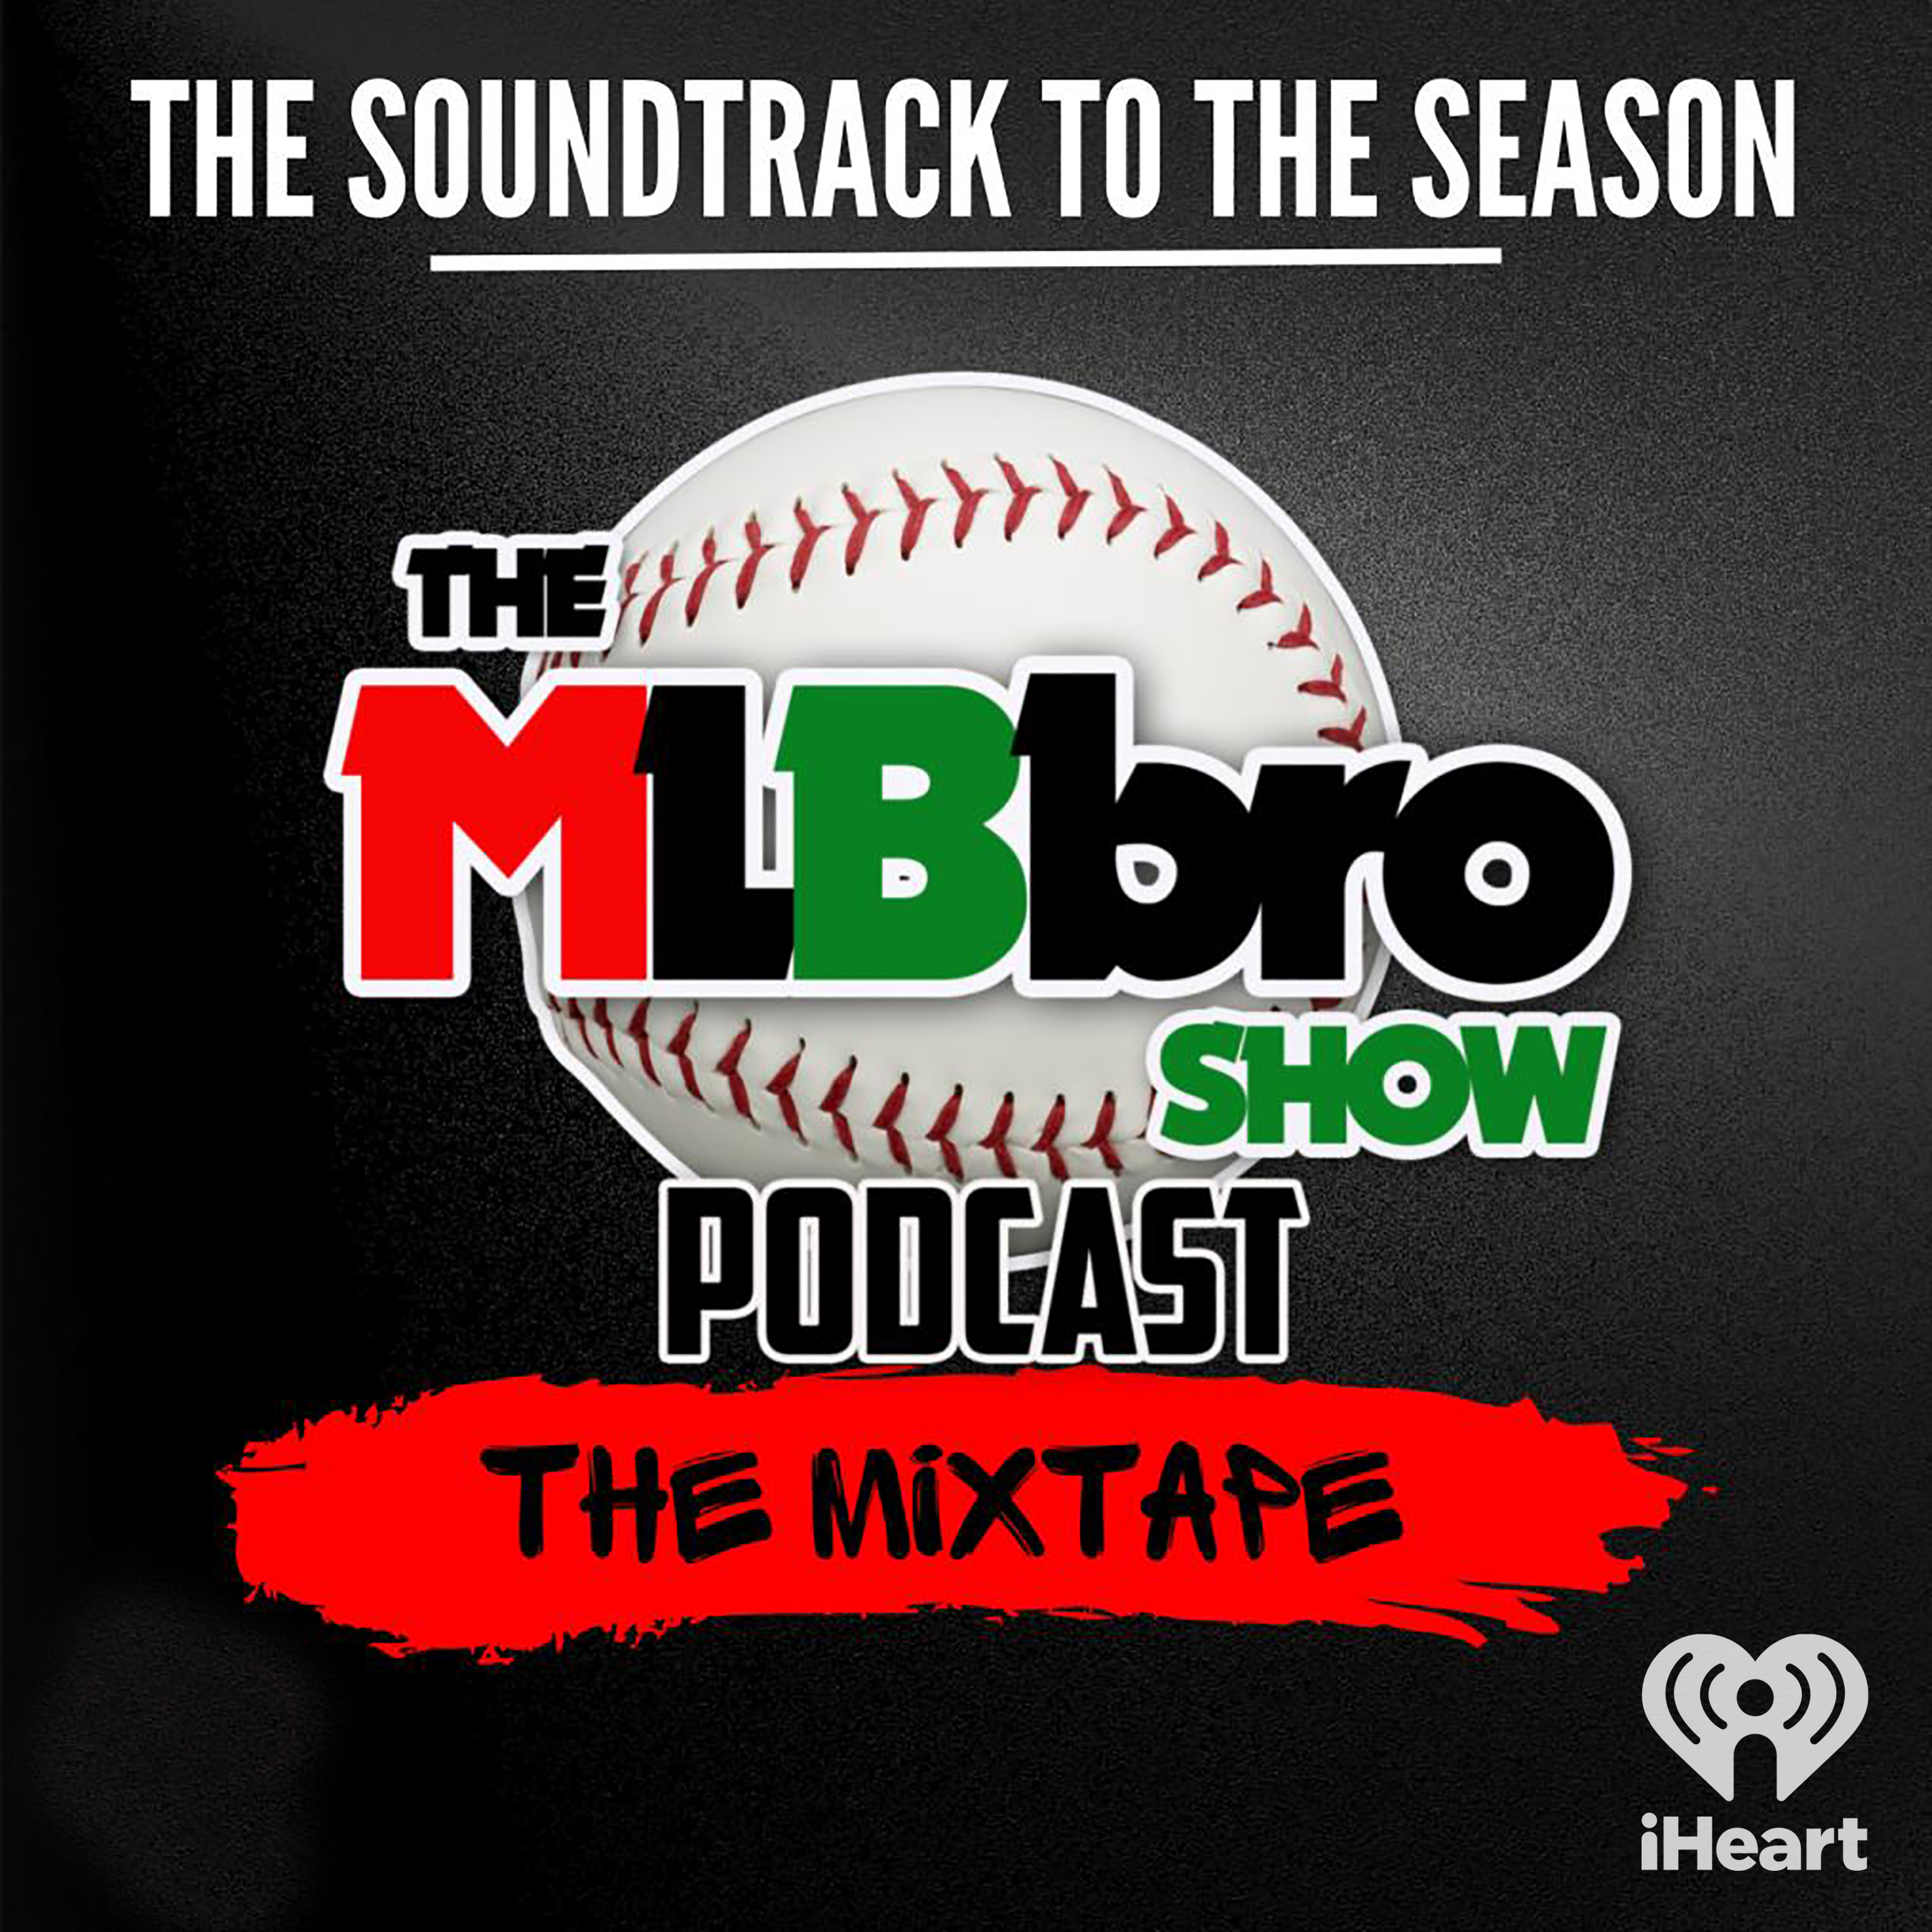 MLBbro Show Podcast The Mixtape Vol 3 Episode 5